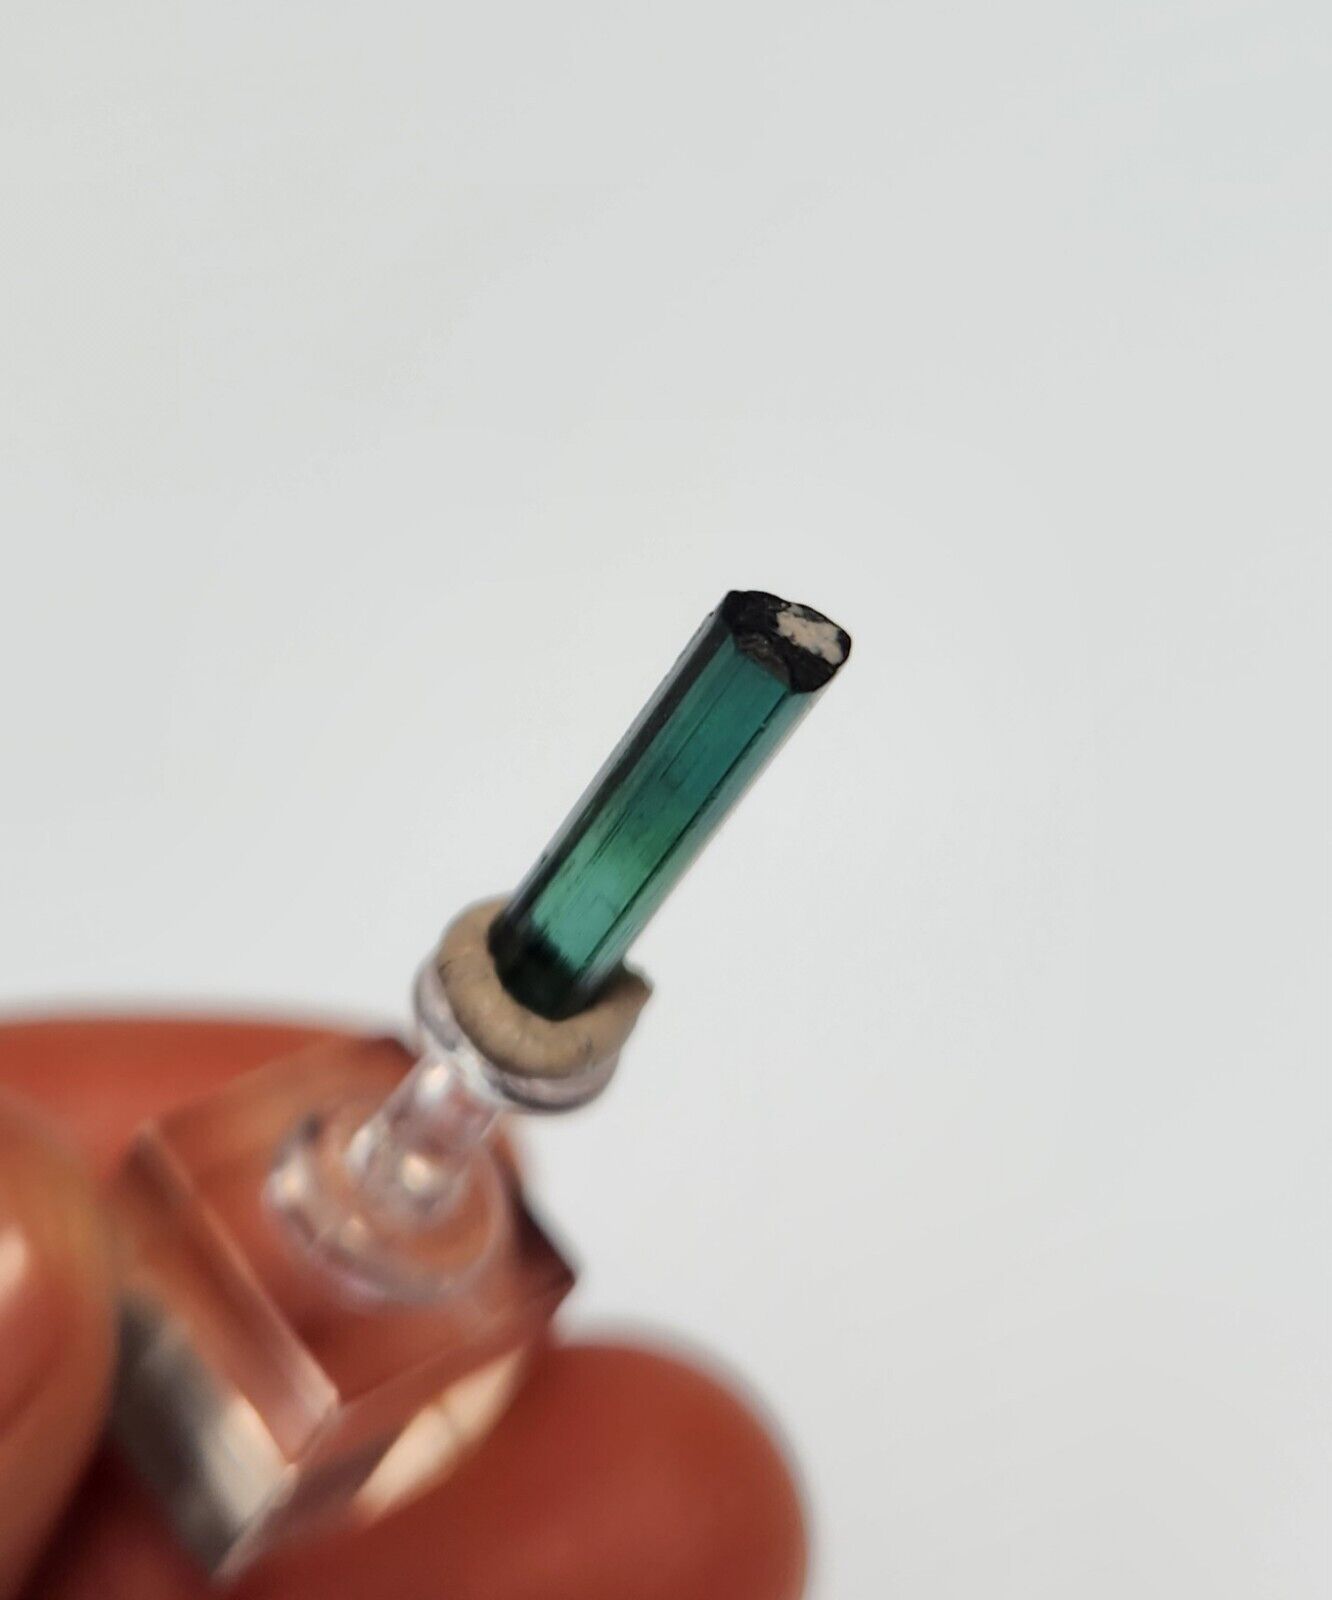 Bicolor Blue Green Indicolite Tourmaline Terminated Gem Crystal - Brazil 0.52g